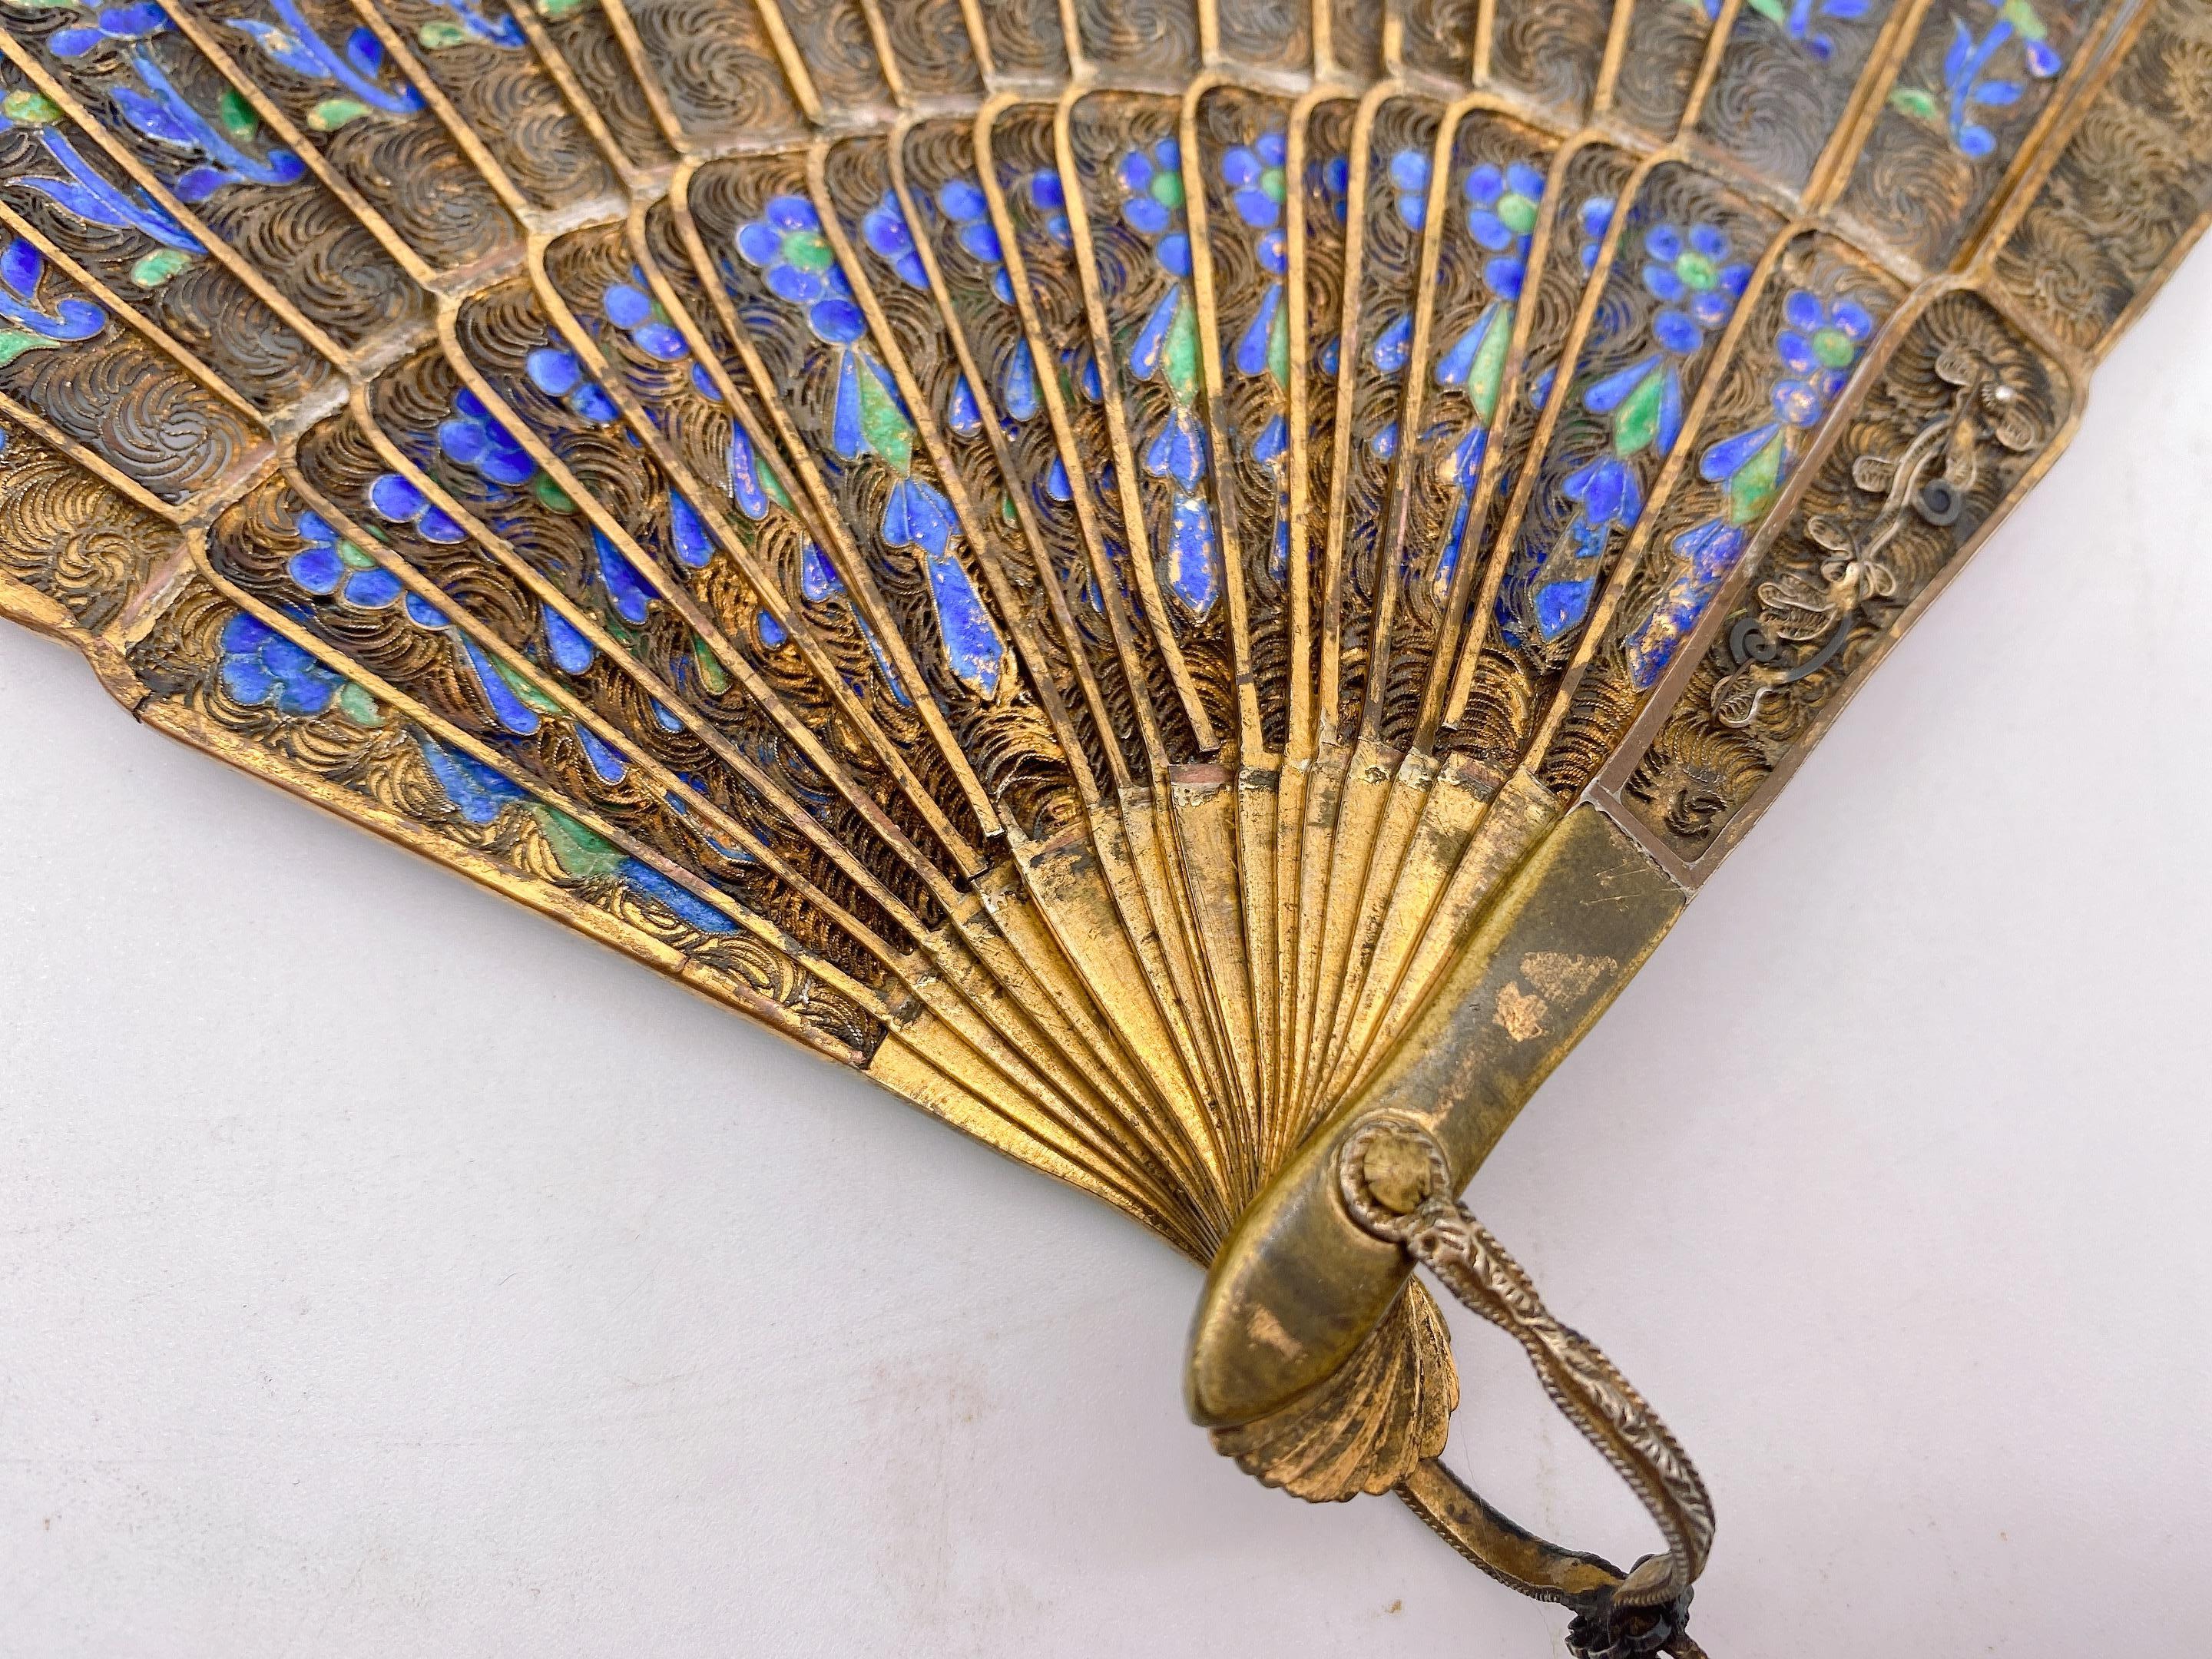 Rare Unique 17th Century Chinese Gilt Silver Filigree and Enamel Brise Fan For Sale 5